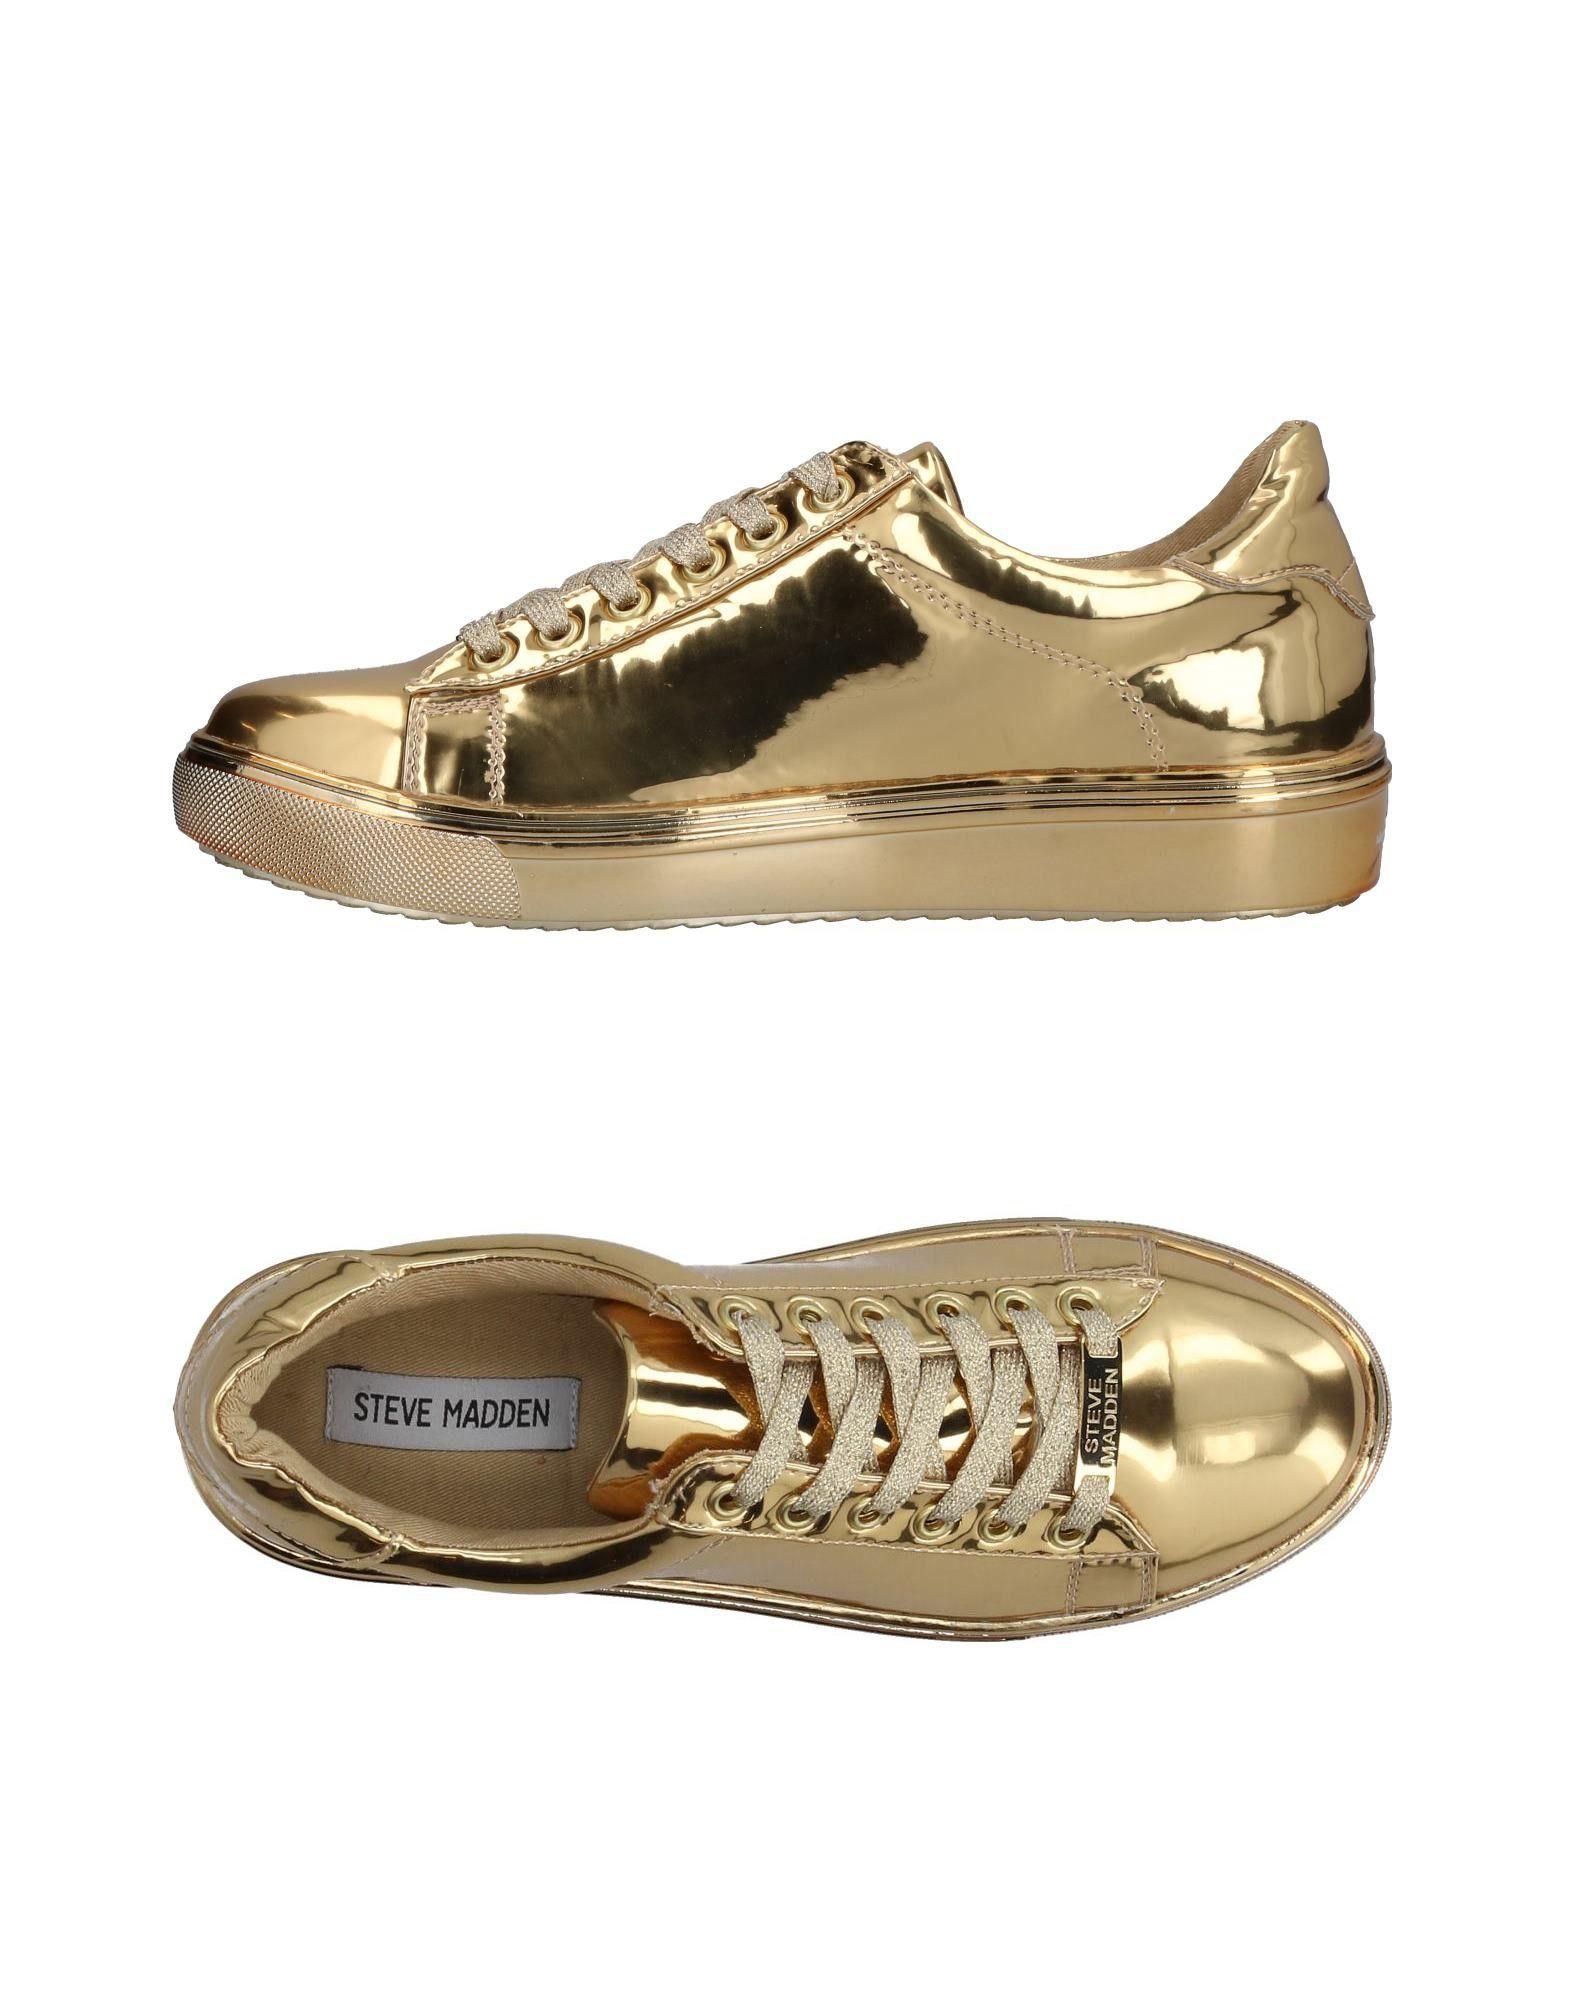 Steve Madden Gold Tennis Shoes, Buy Now, Store, 60% OFF, sportsregras.com